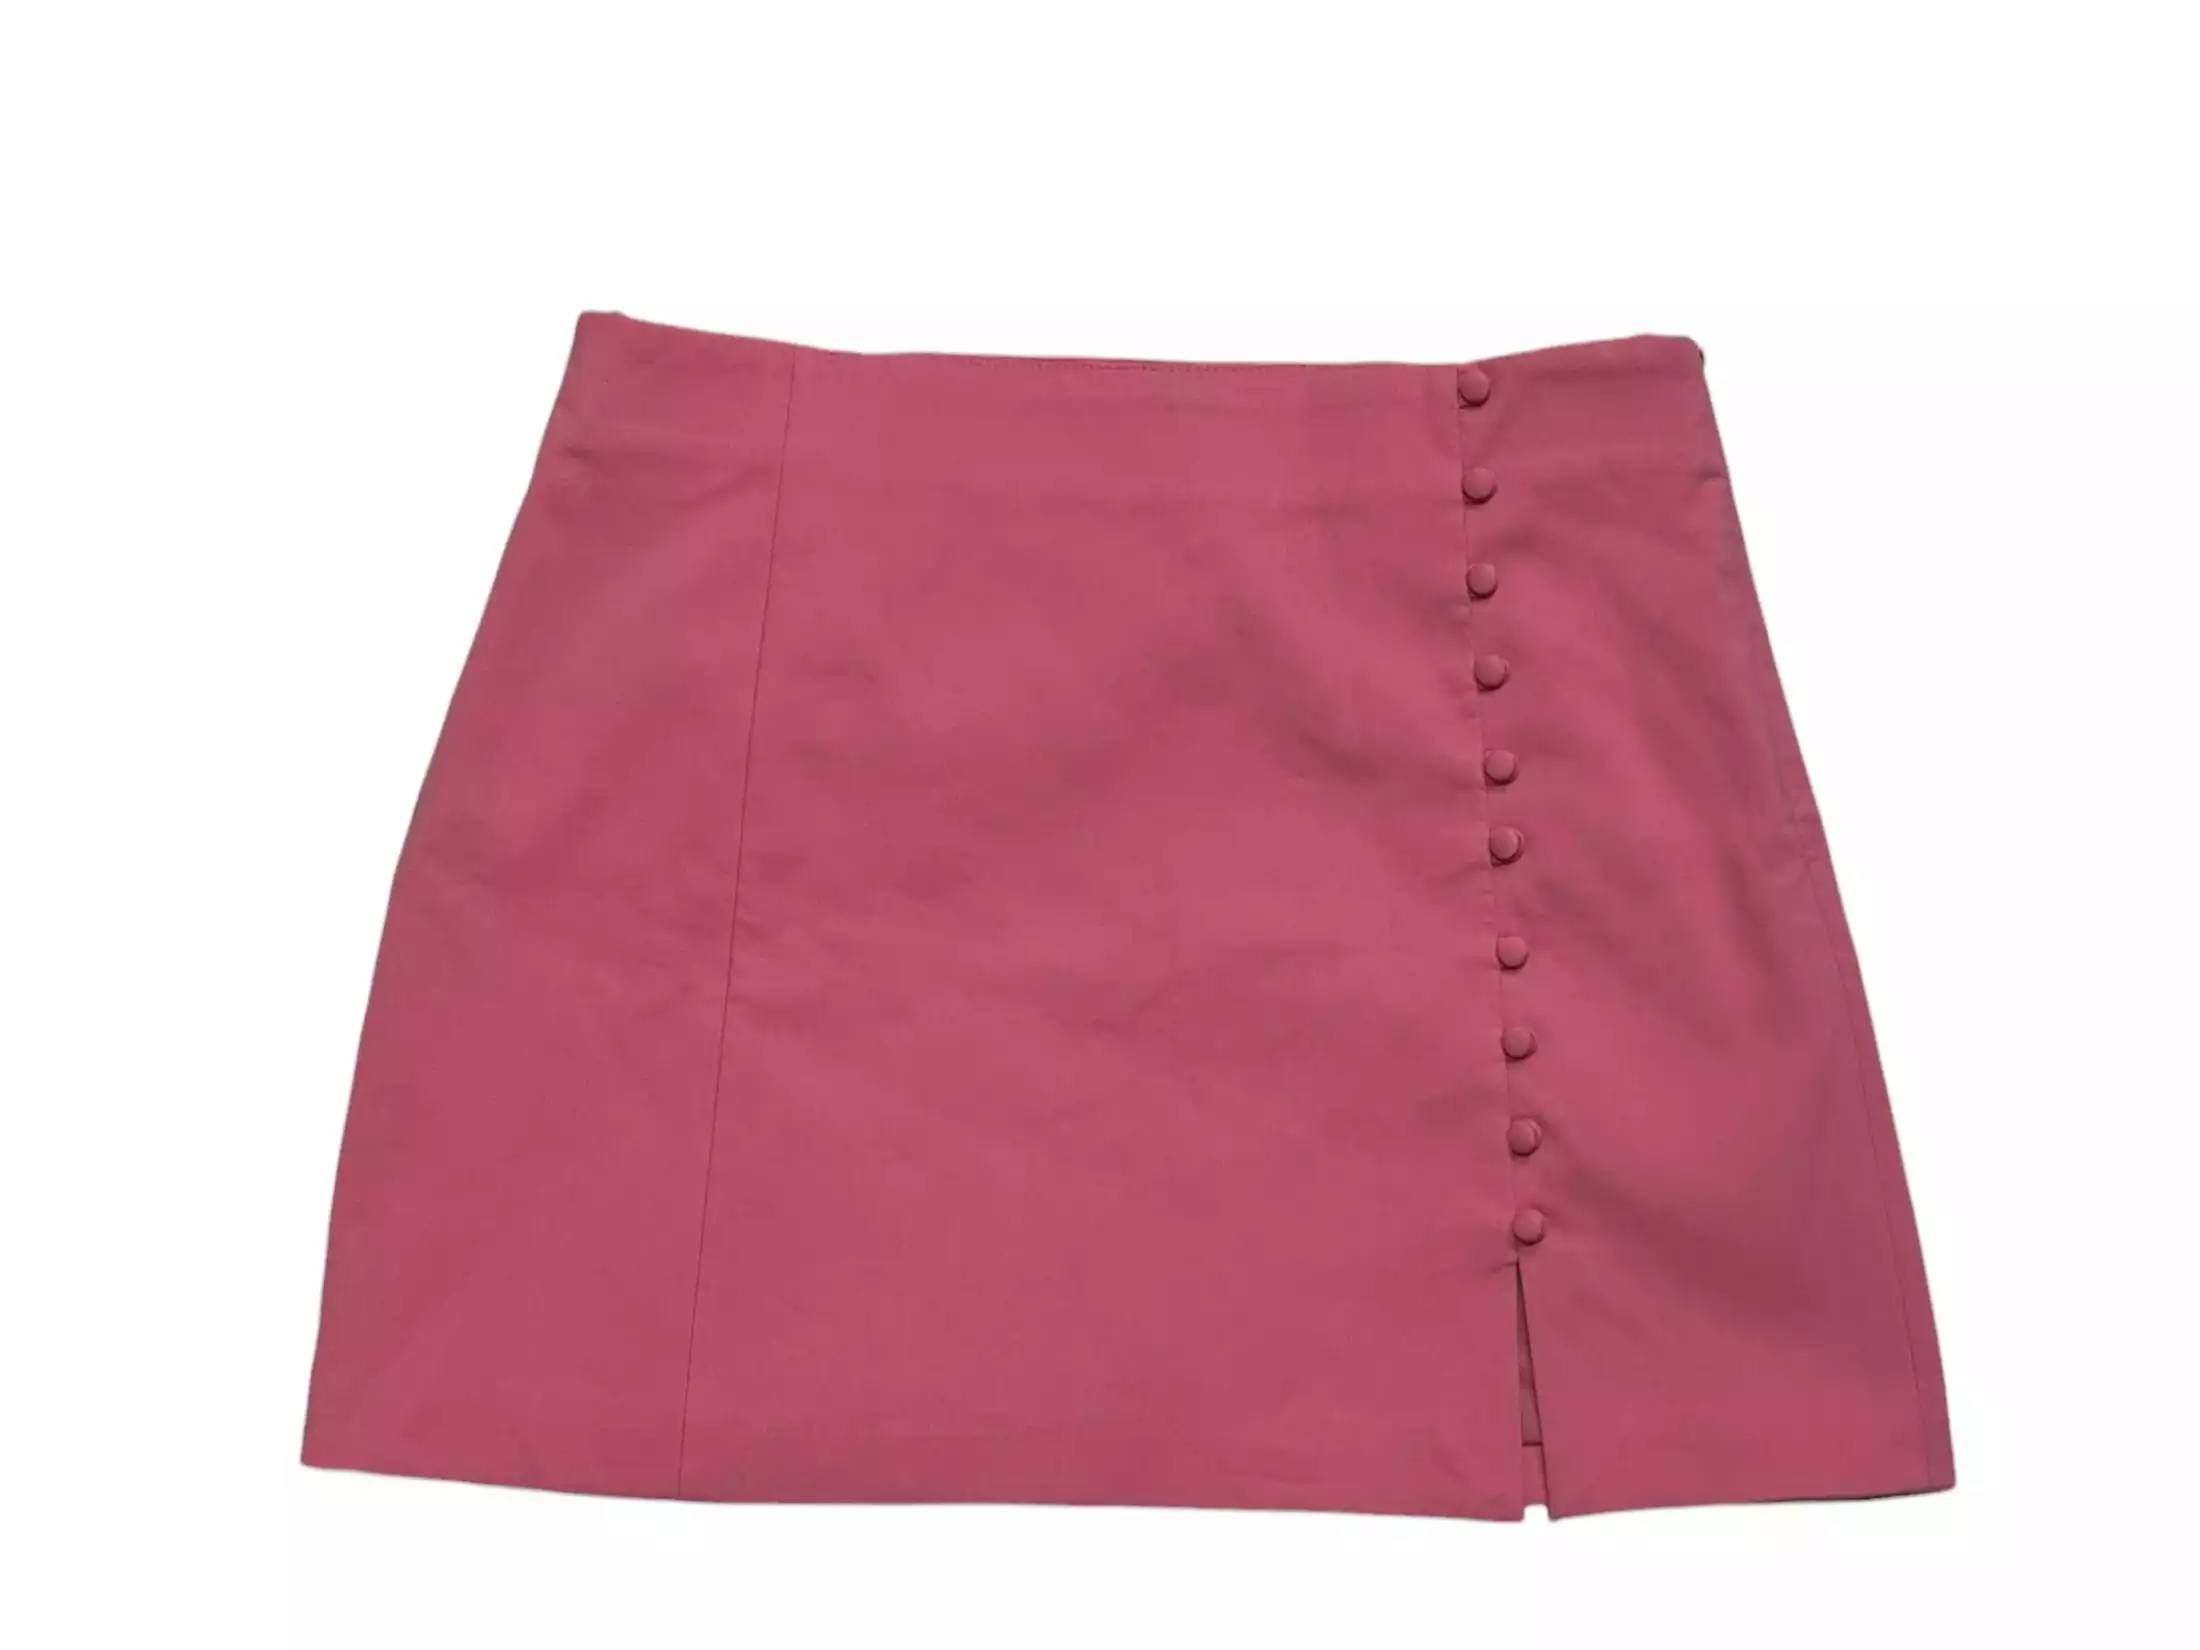 Skirt by Zara